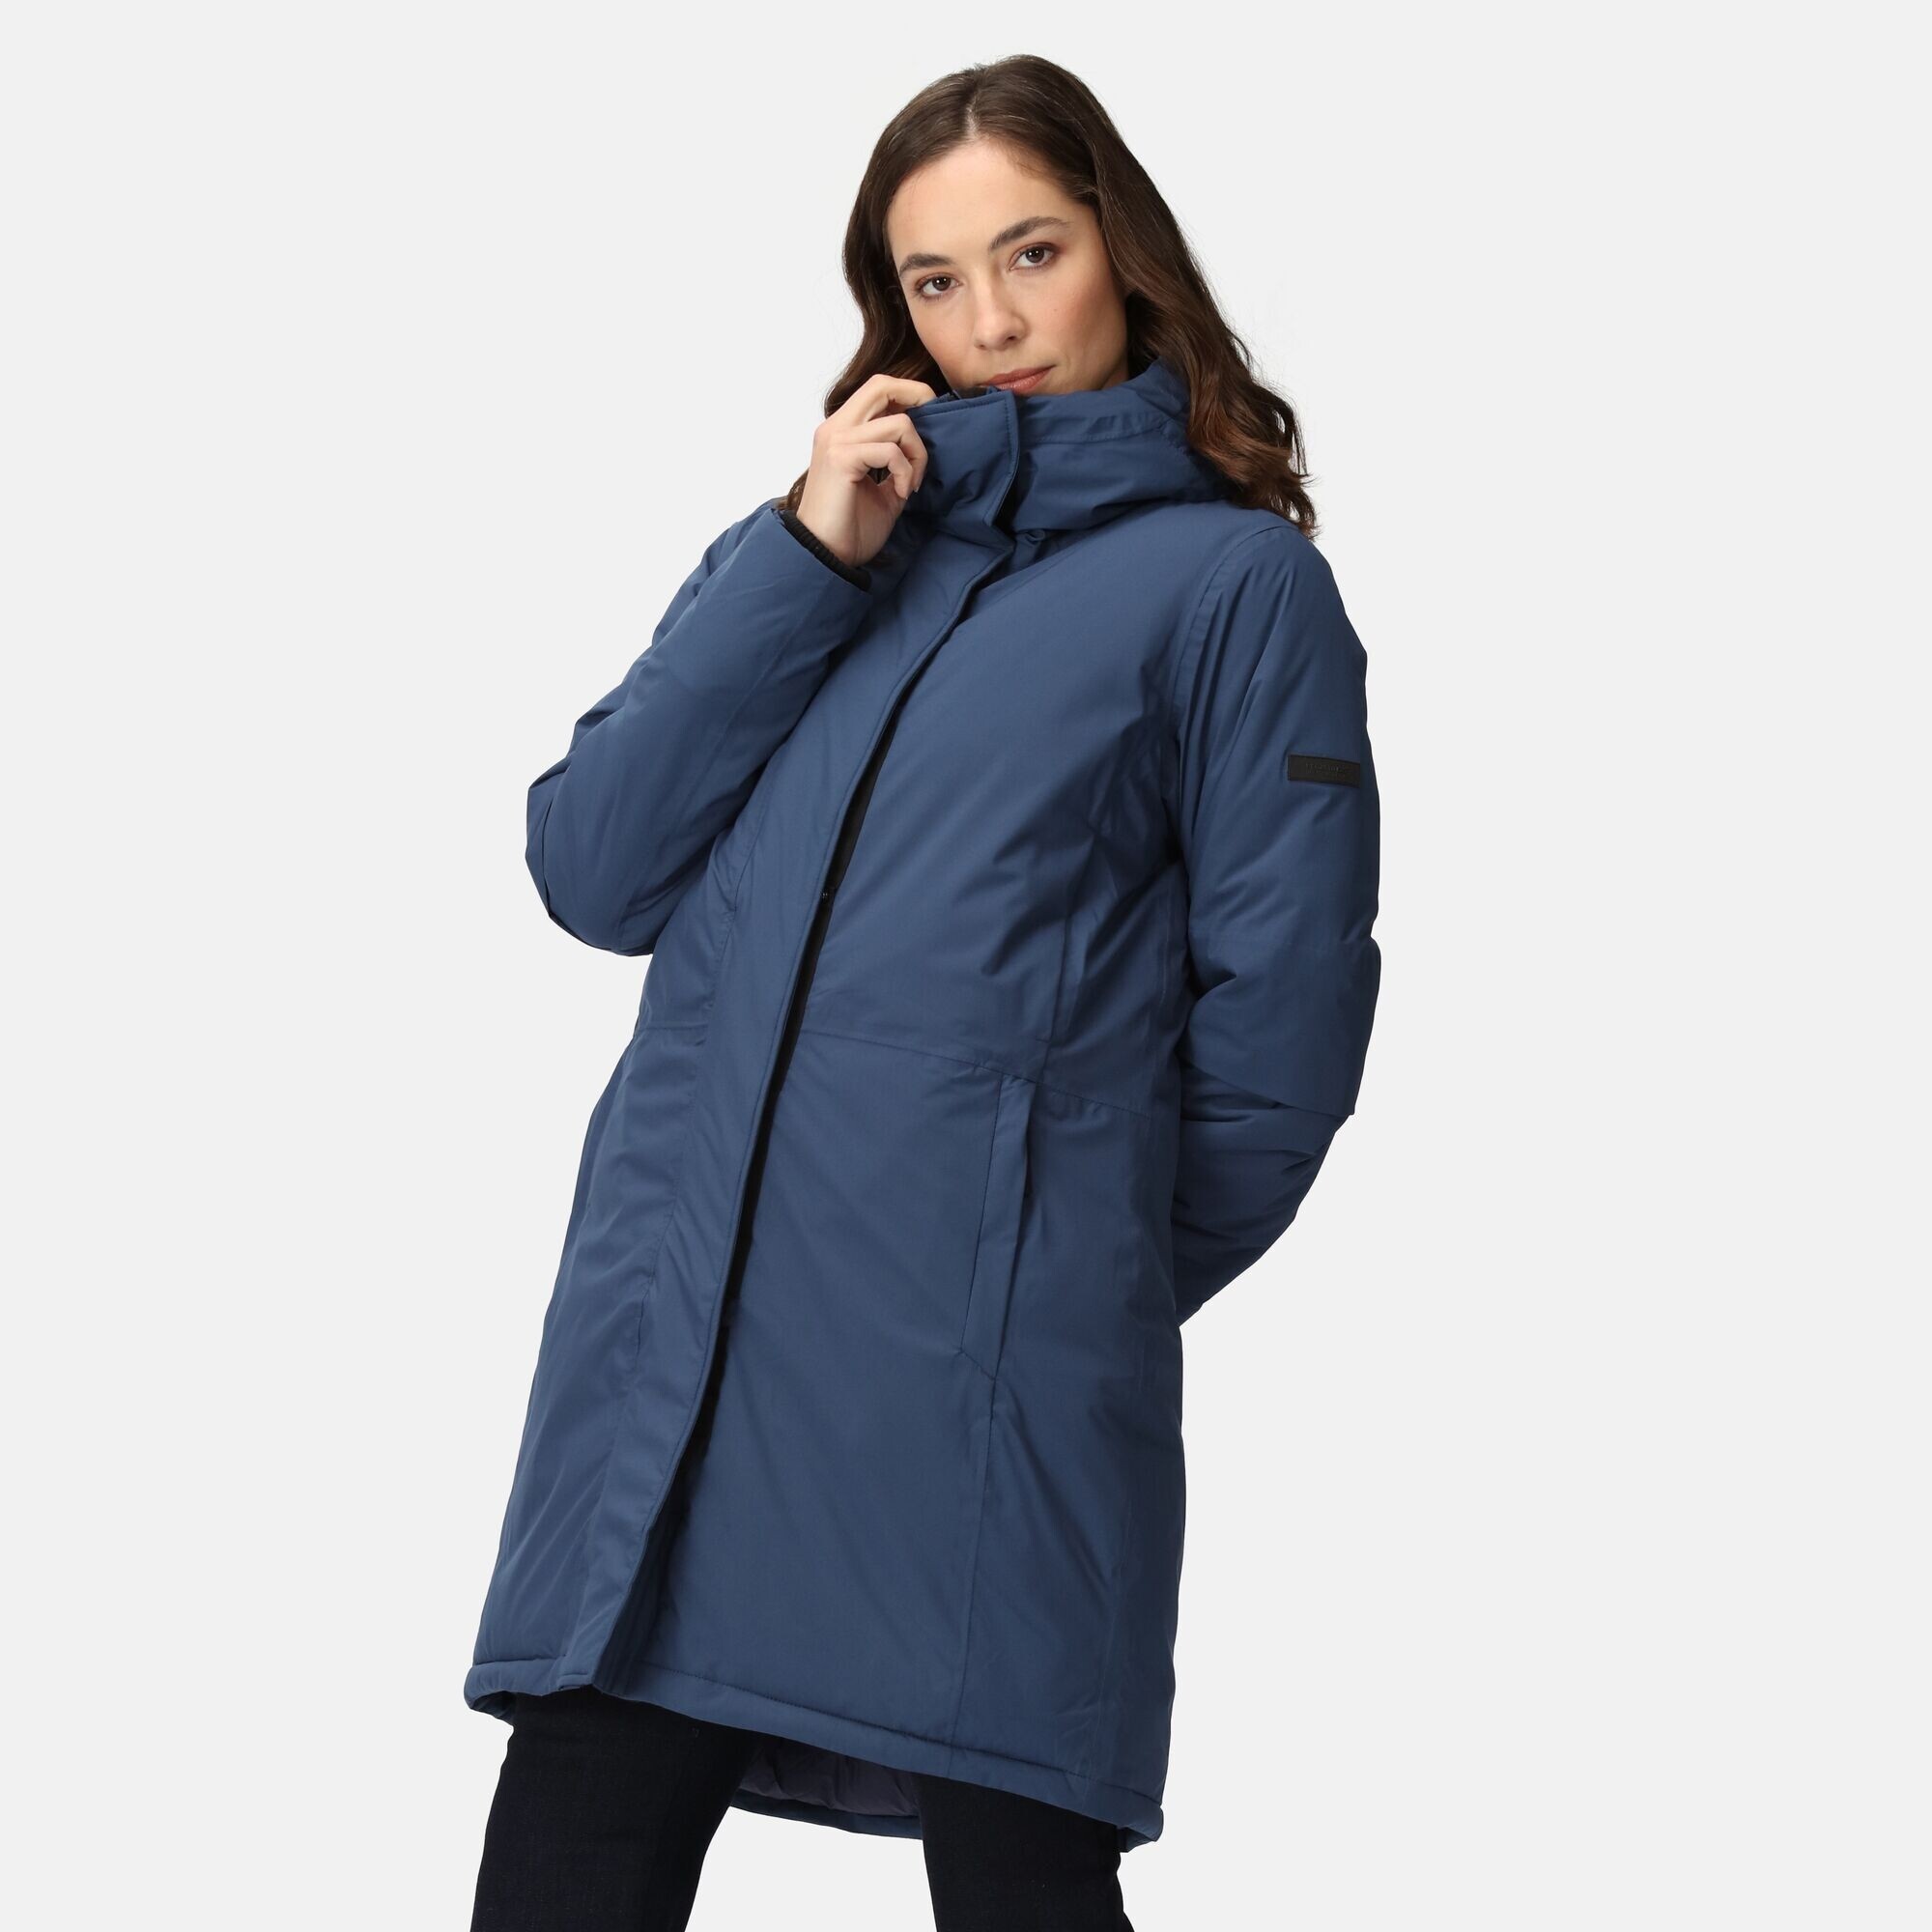 Dámský zimní kabát Yewbank III RWP384-VD4 modrý - Regatta 44